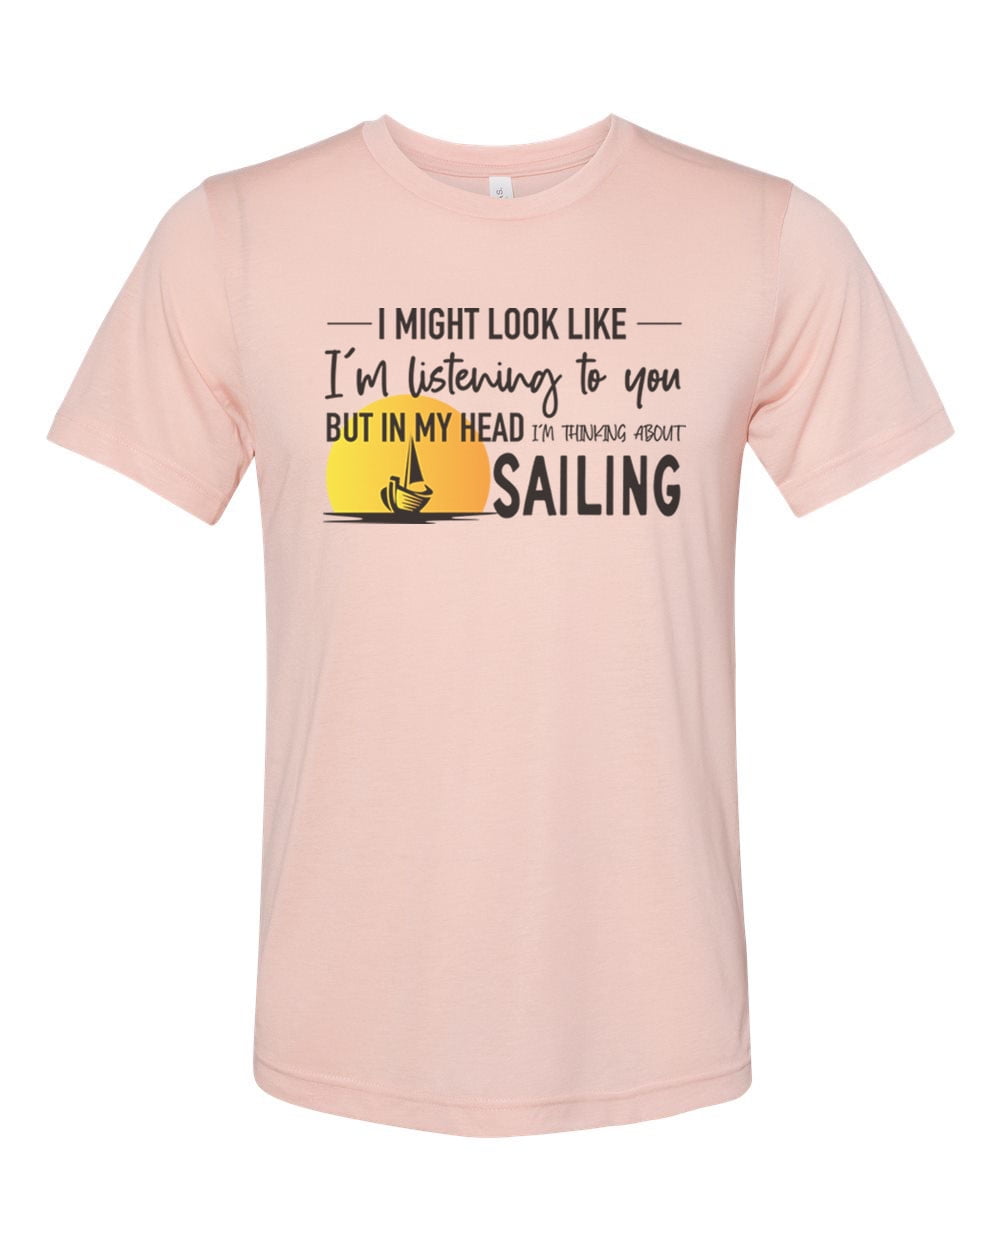 Sailing Shirt, Thinking About Sailing, Gift For Sailor, Sailor Shirt,  Unisex Fit, Boat Shirt, Sailboat Gift, Sailing Decor, Sublimated Tee,  Lilac, XL